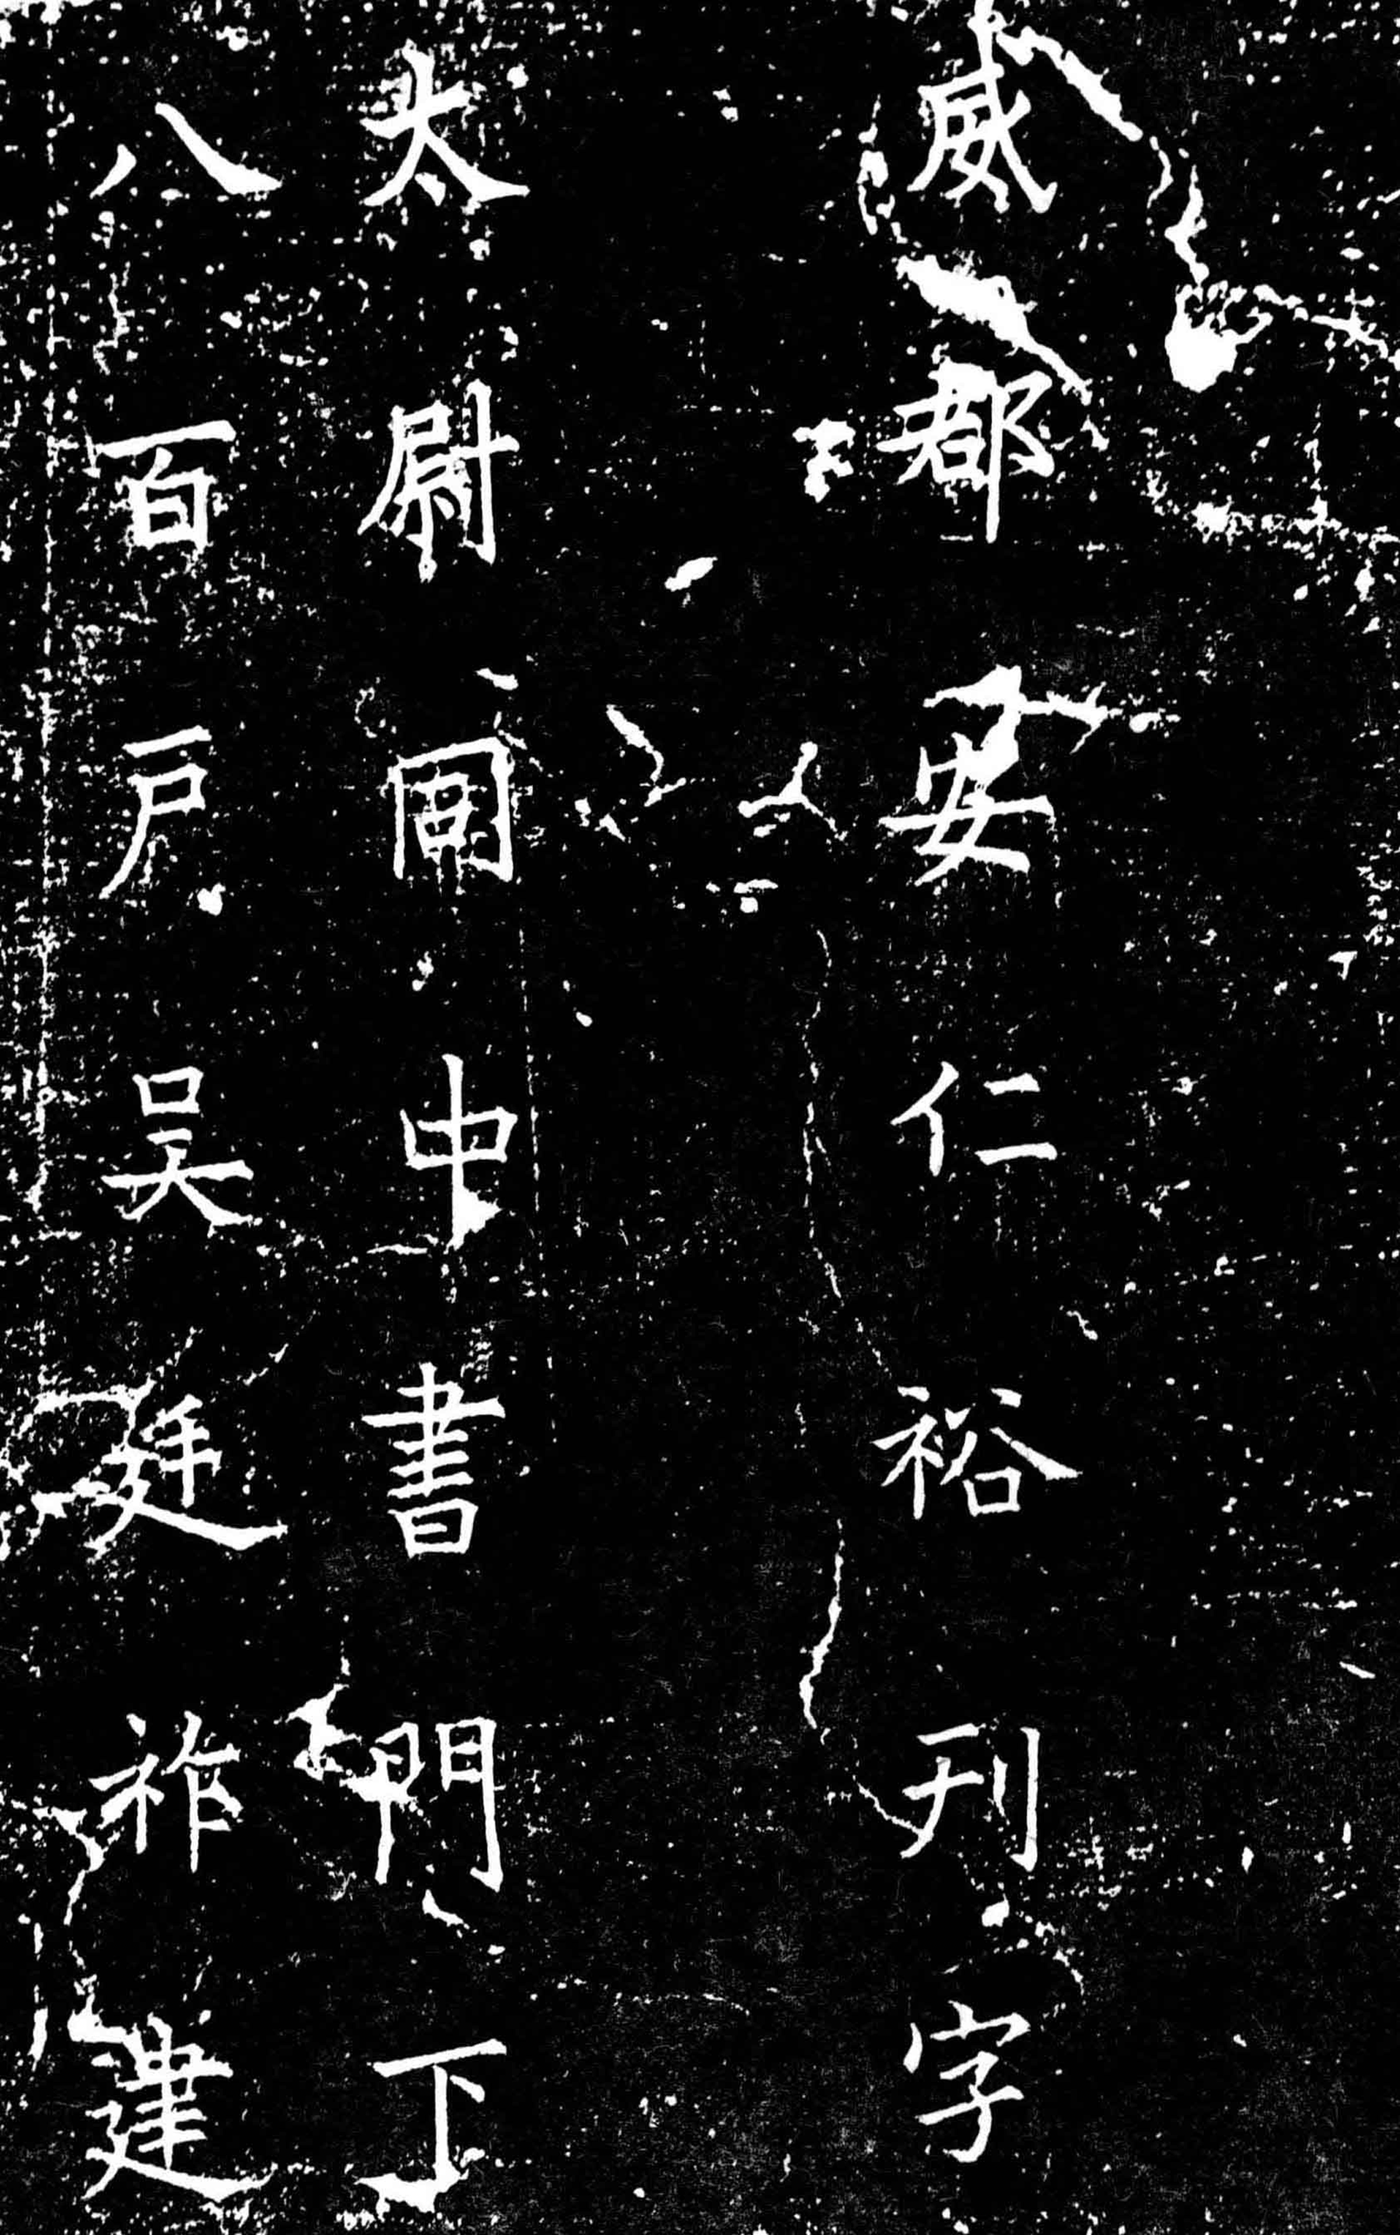 Guo Zhongshu's Archaeology of Writing | Journal of Chinese History